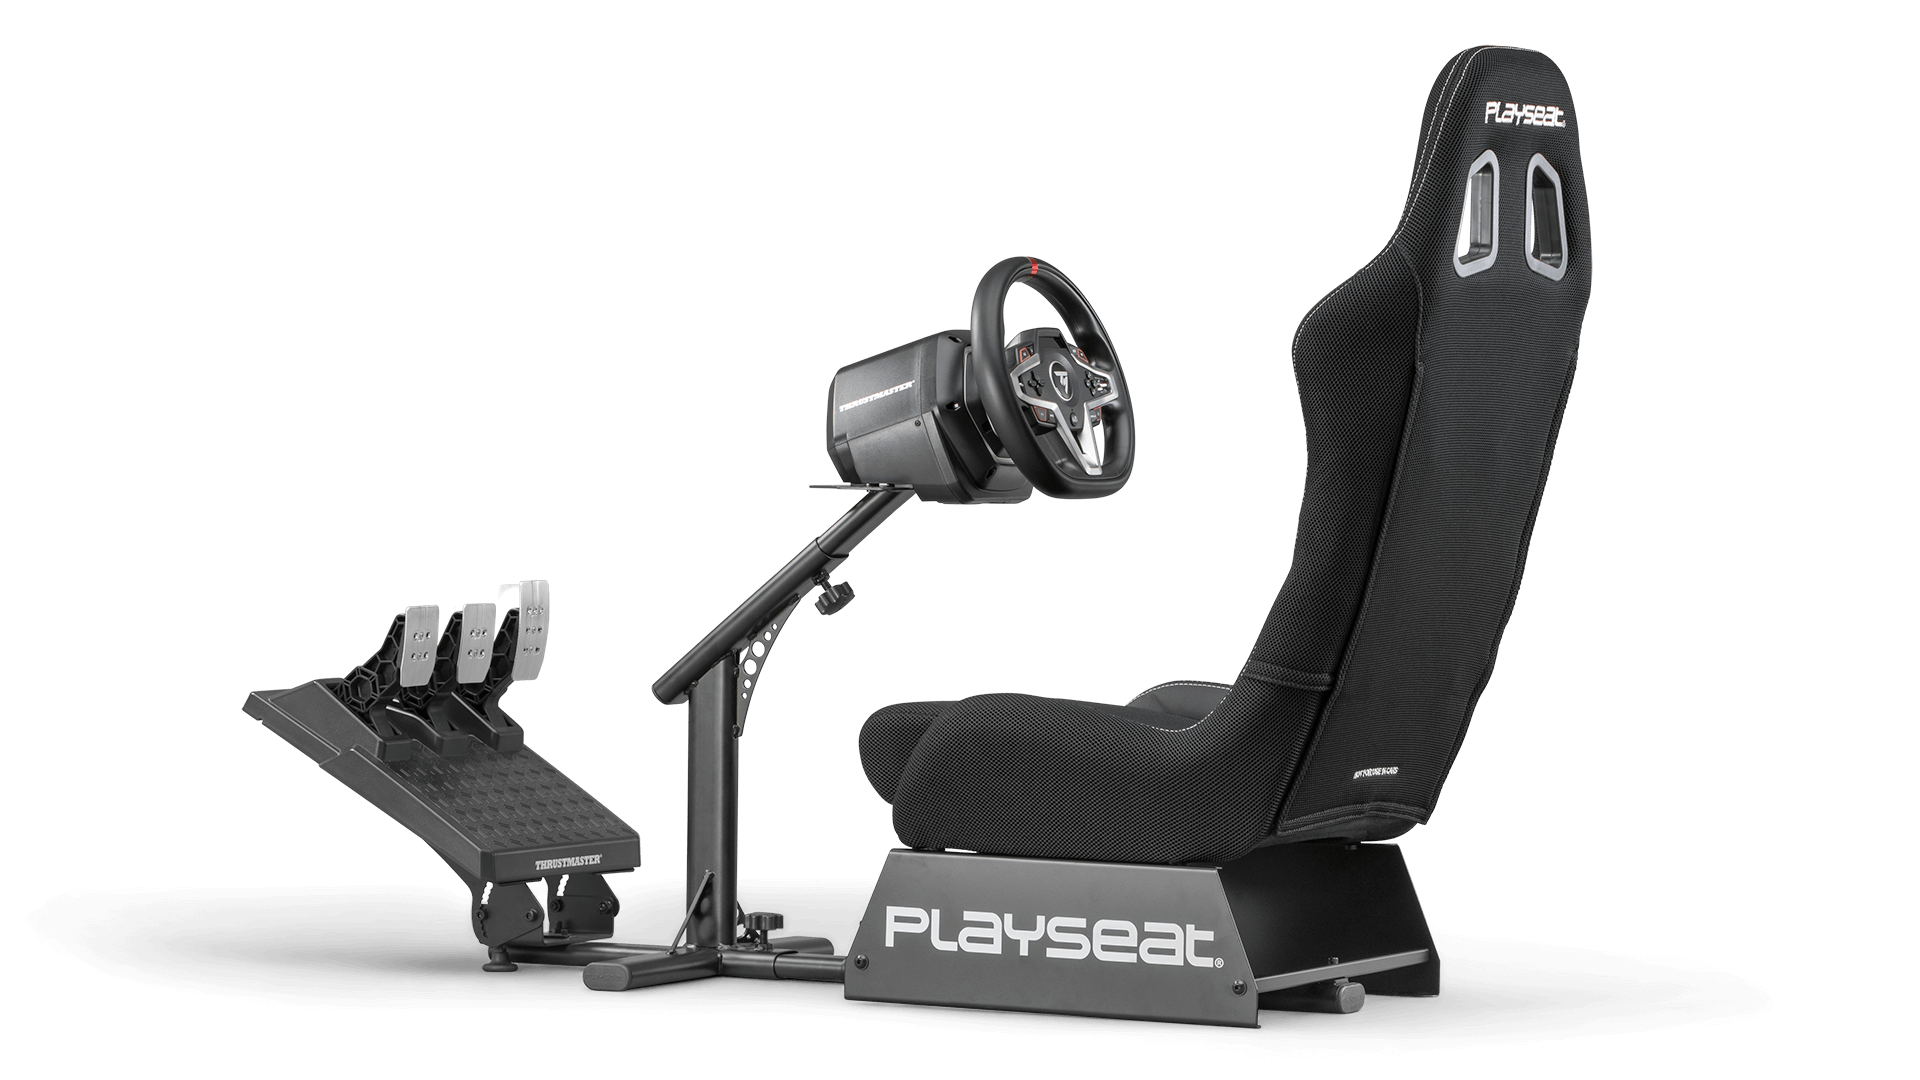 playseat-evolution-black-actifit-racing-simulator-back-angle-view-thrustmaster-1920x1080.png